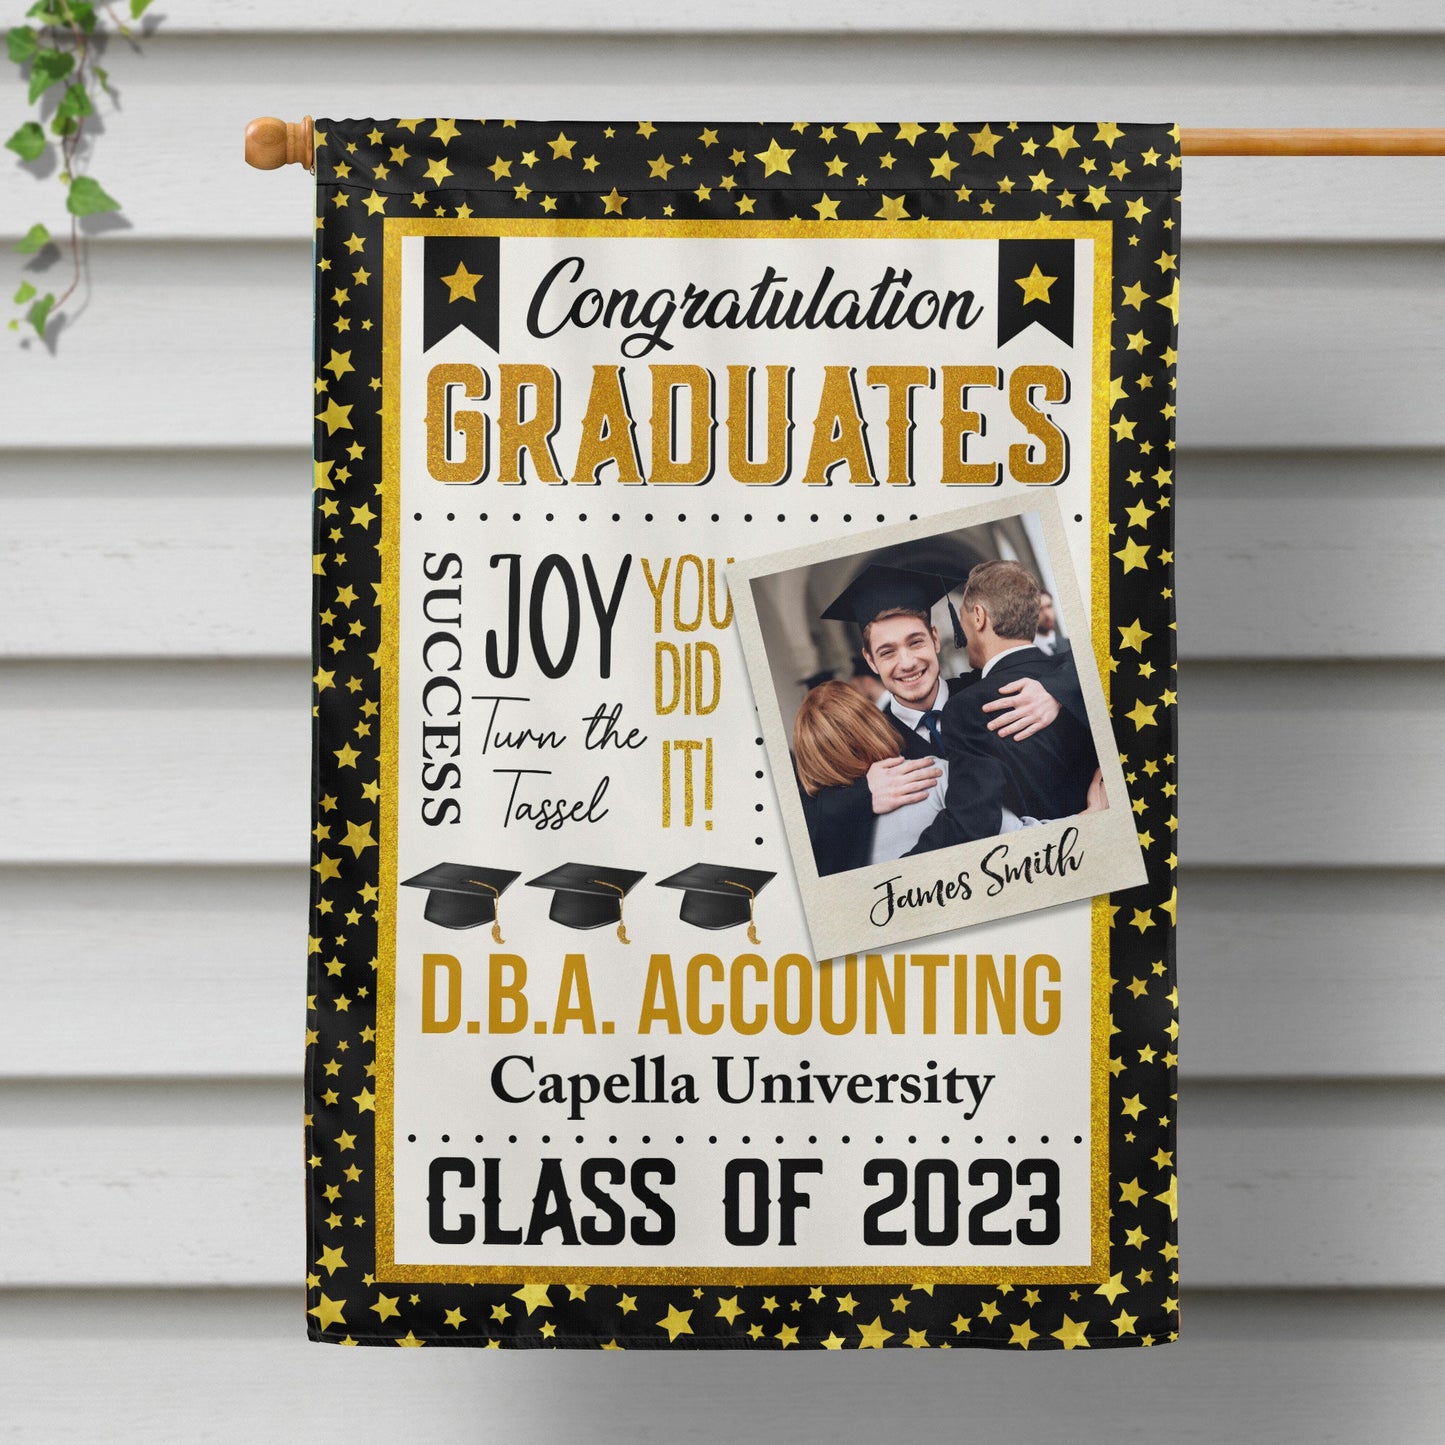 Congratulation Graduates - Personalized Photo Flag